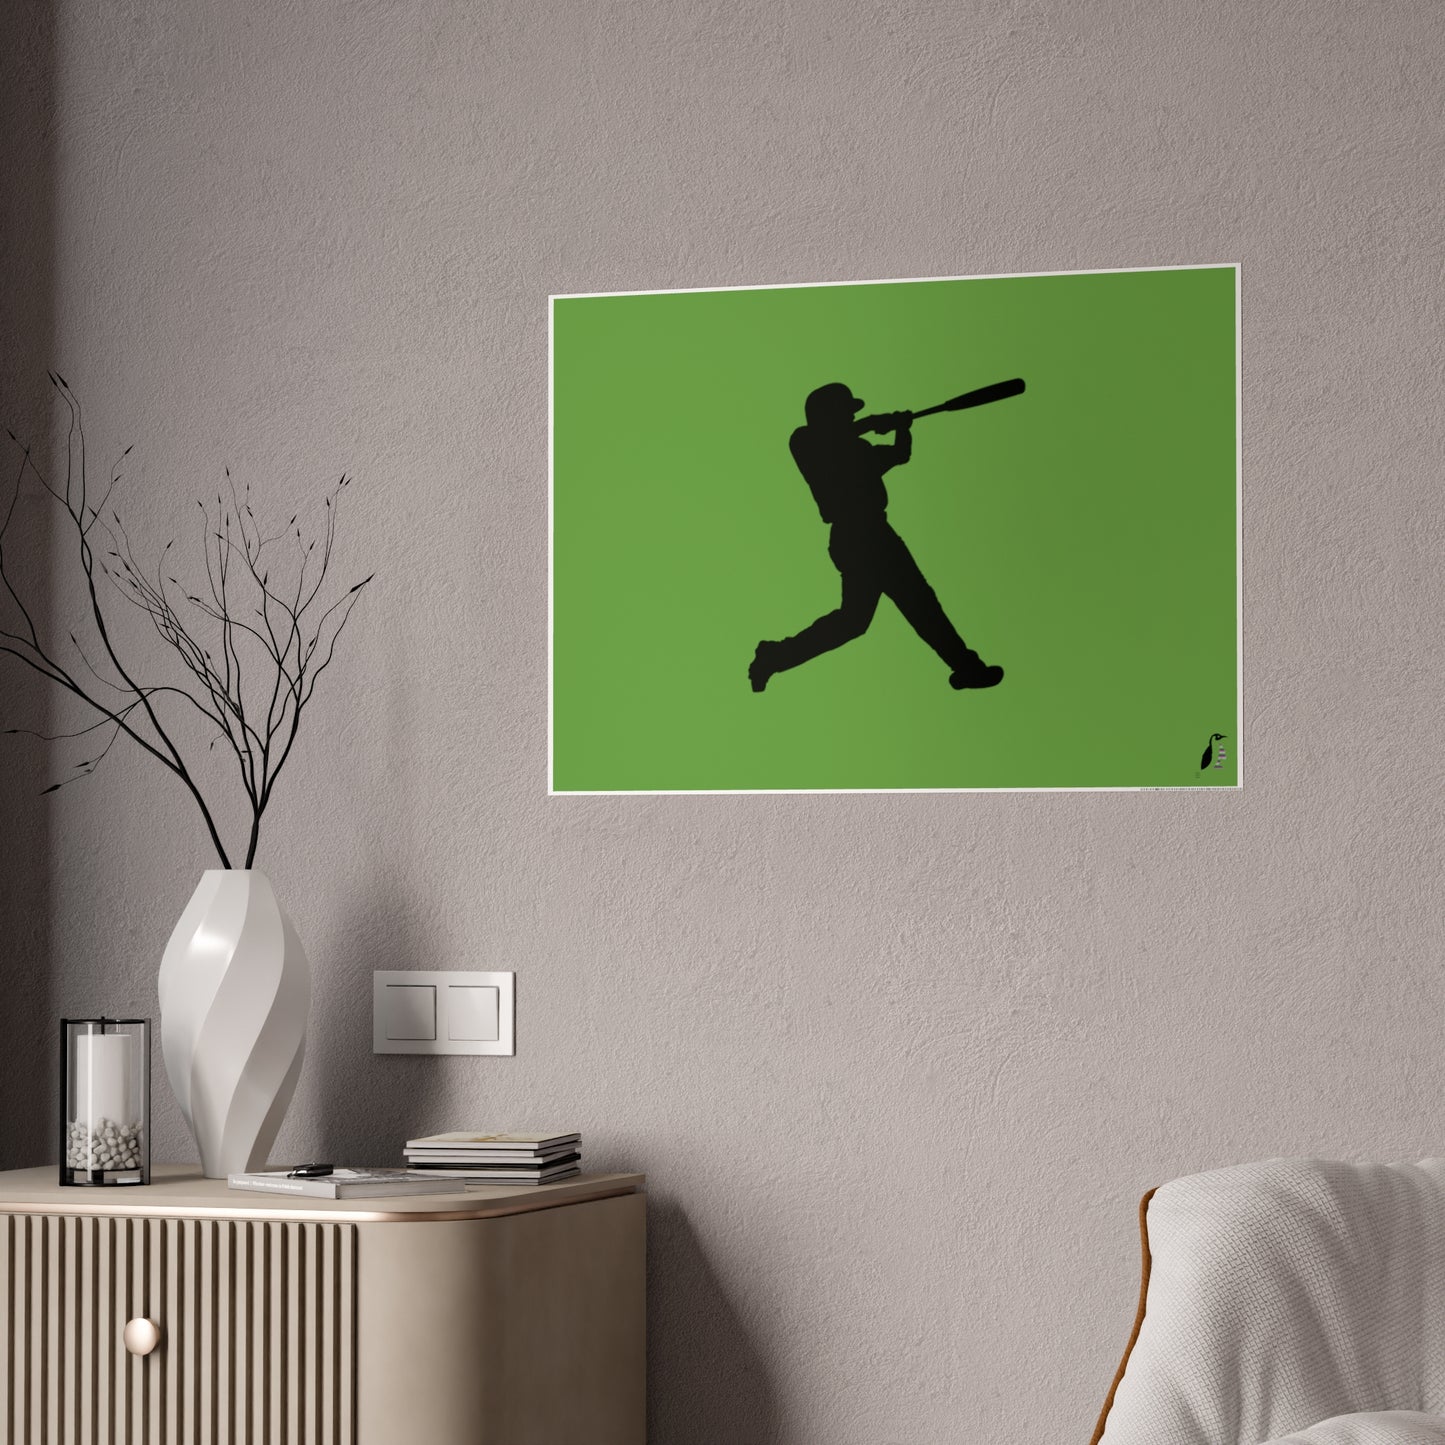 Gloss Posters: Baseball Green